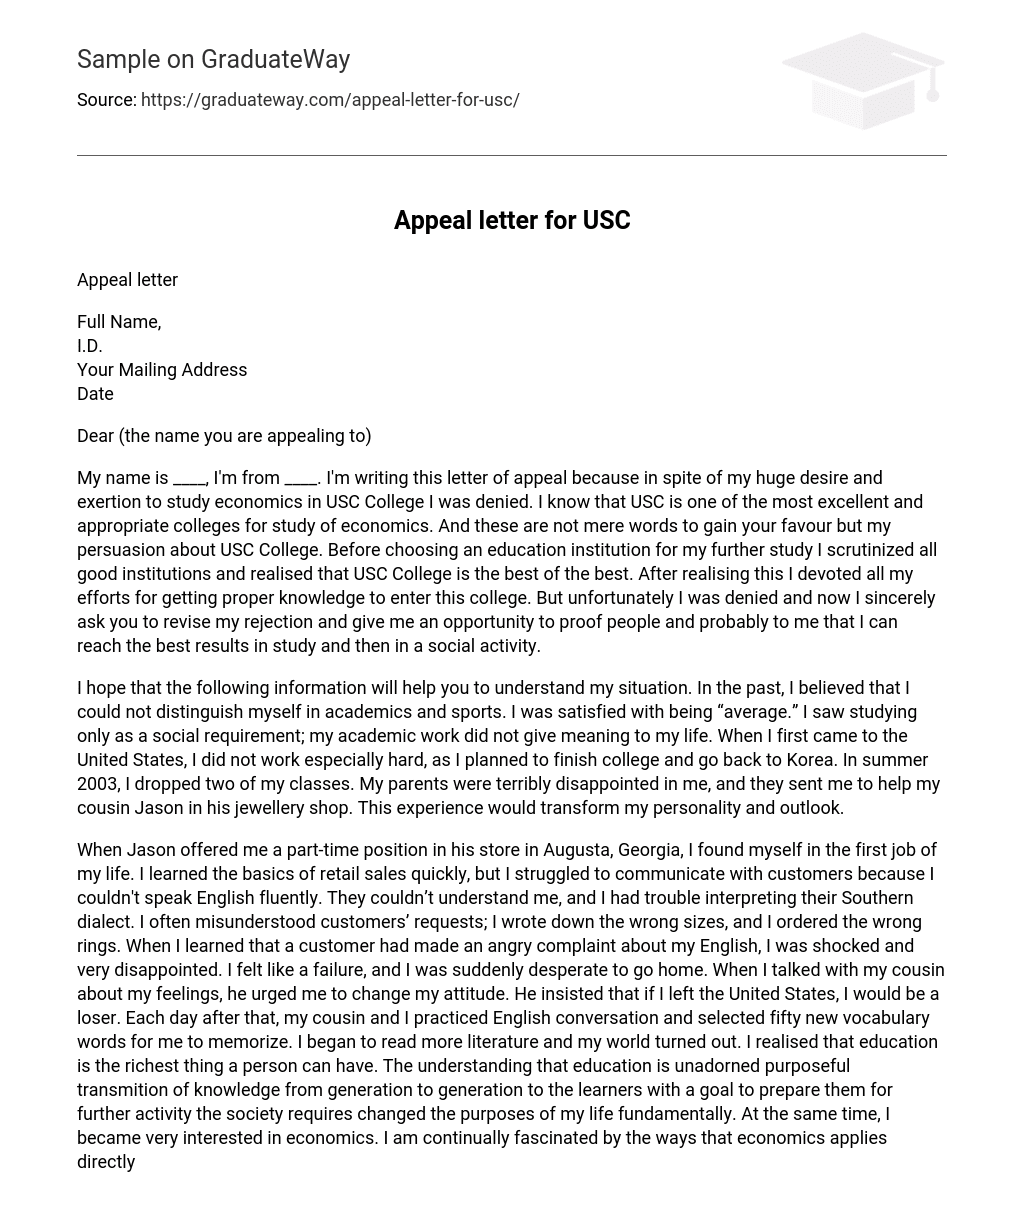 Appeal letter for USC